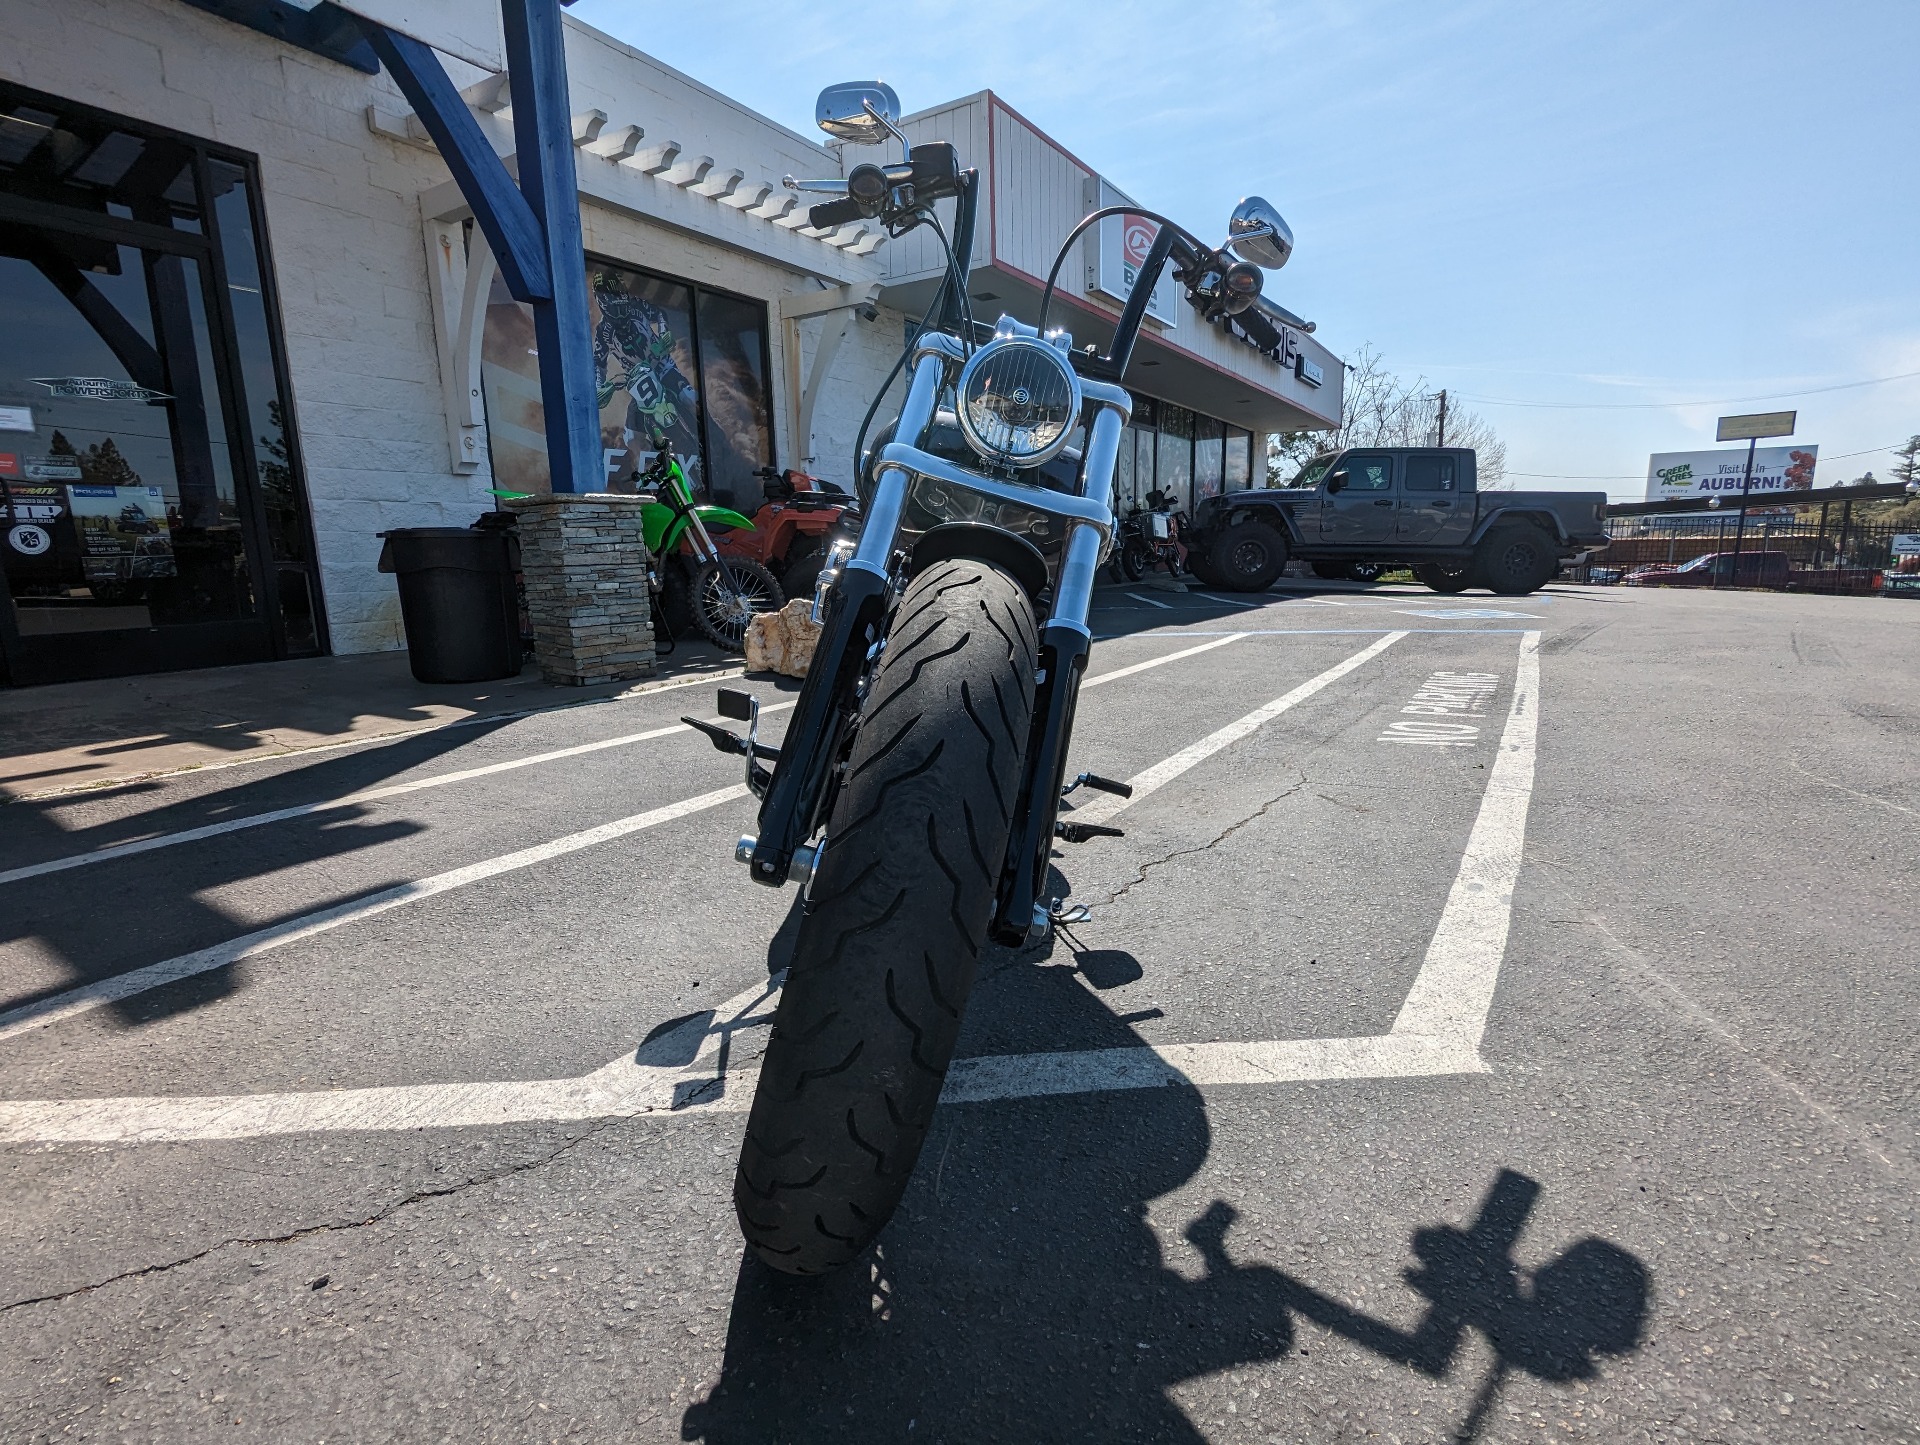 2015 Harley-Davidson Breakout® in Auburn, California - Photo 2